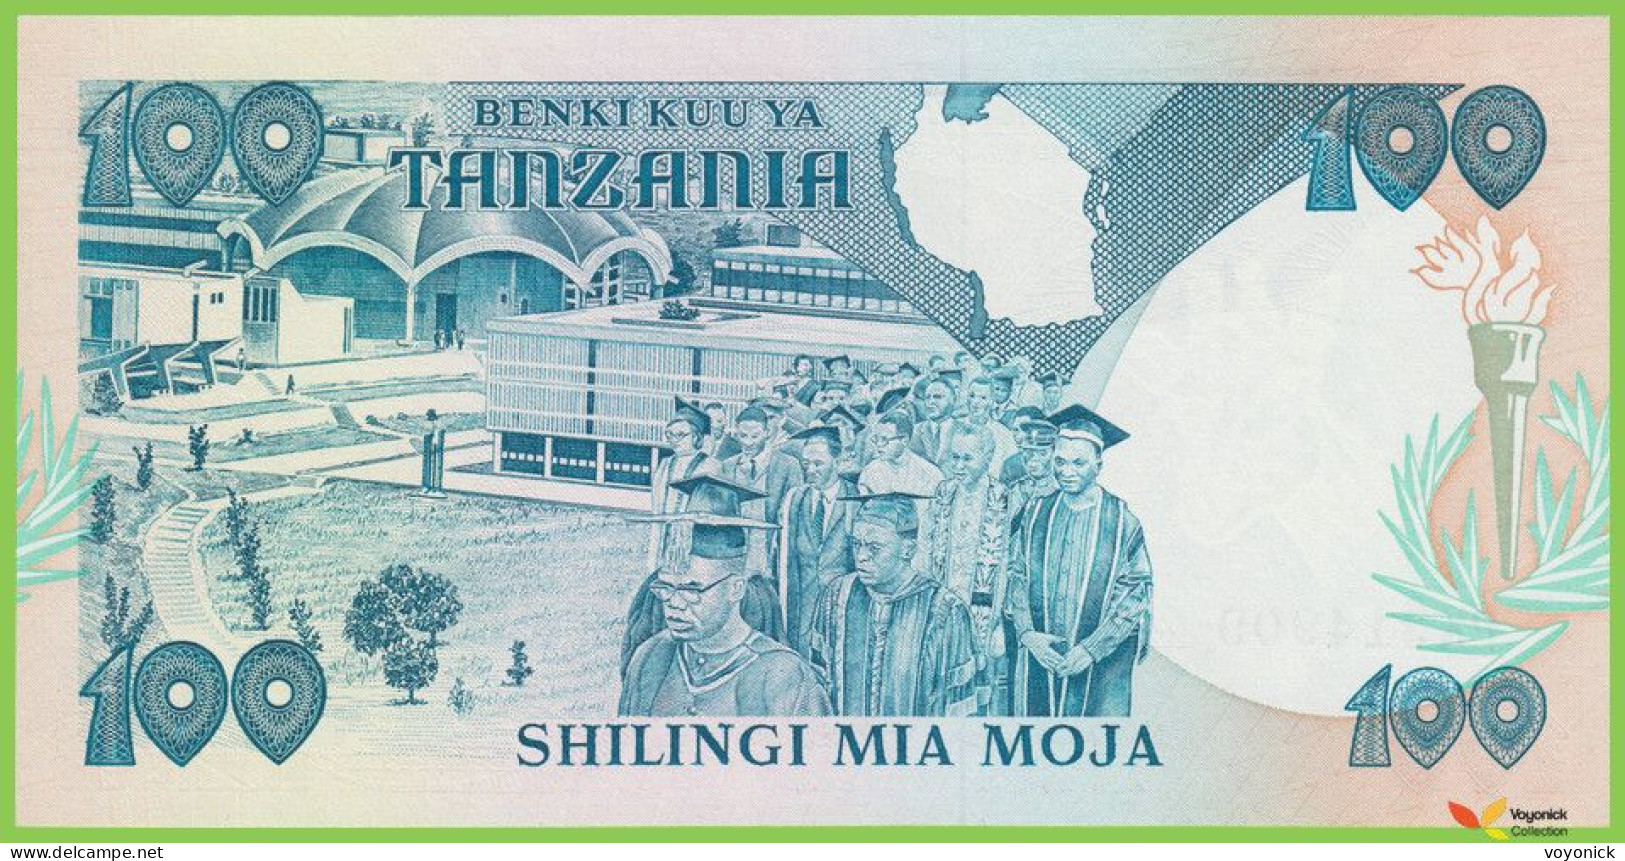 Voyo TANZANIA 100 Shilingi ND(1986) P14b B114b PK UNC - Tanzania